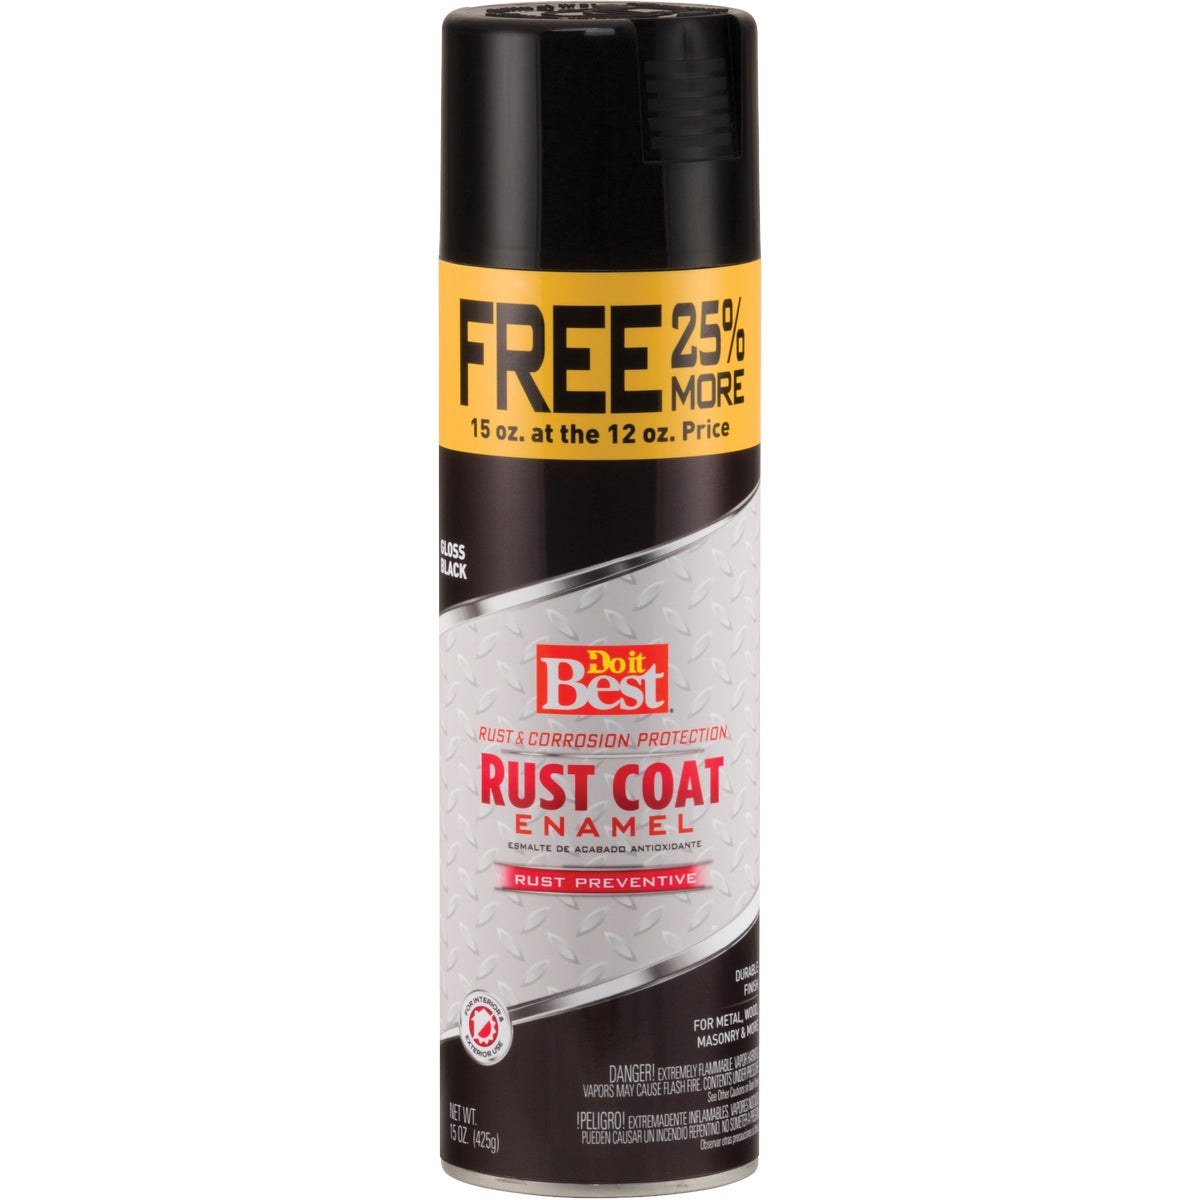 Item 786263, Bonus can. Rust preventive alkyd formula resists moisture and corrosion.